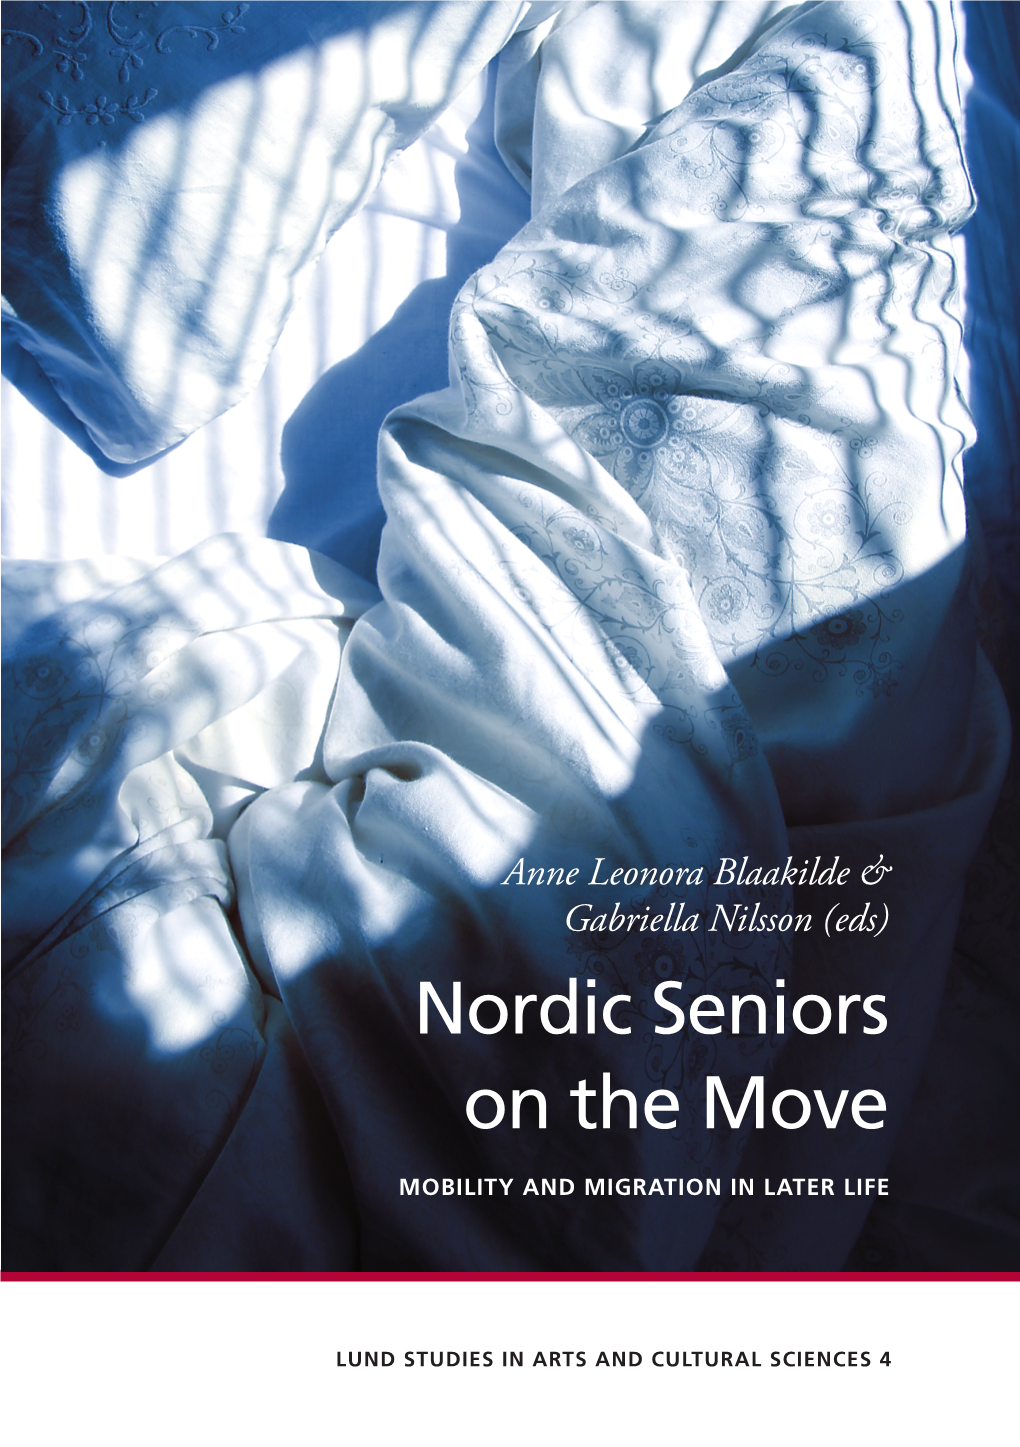 Nordic Seniors on the Move ANNE LEONORA BLAAKILDE & GABRIELLA NILSSON (EDS) 4 ISSN 2001-7529 Respectively